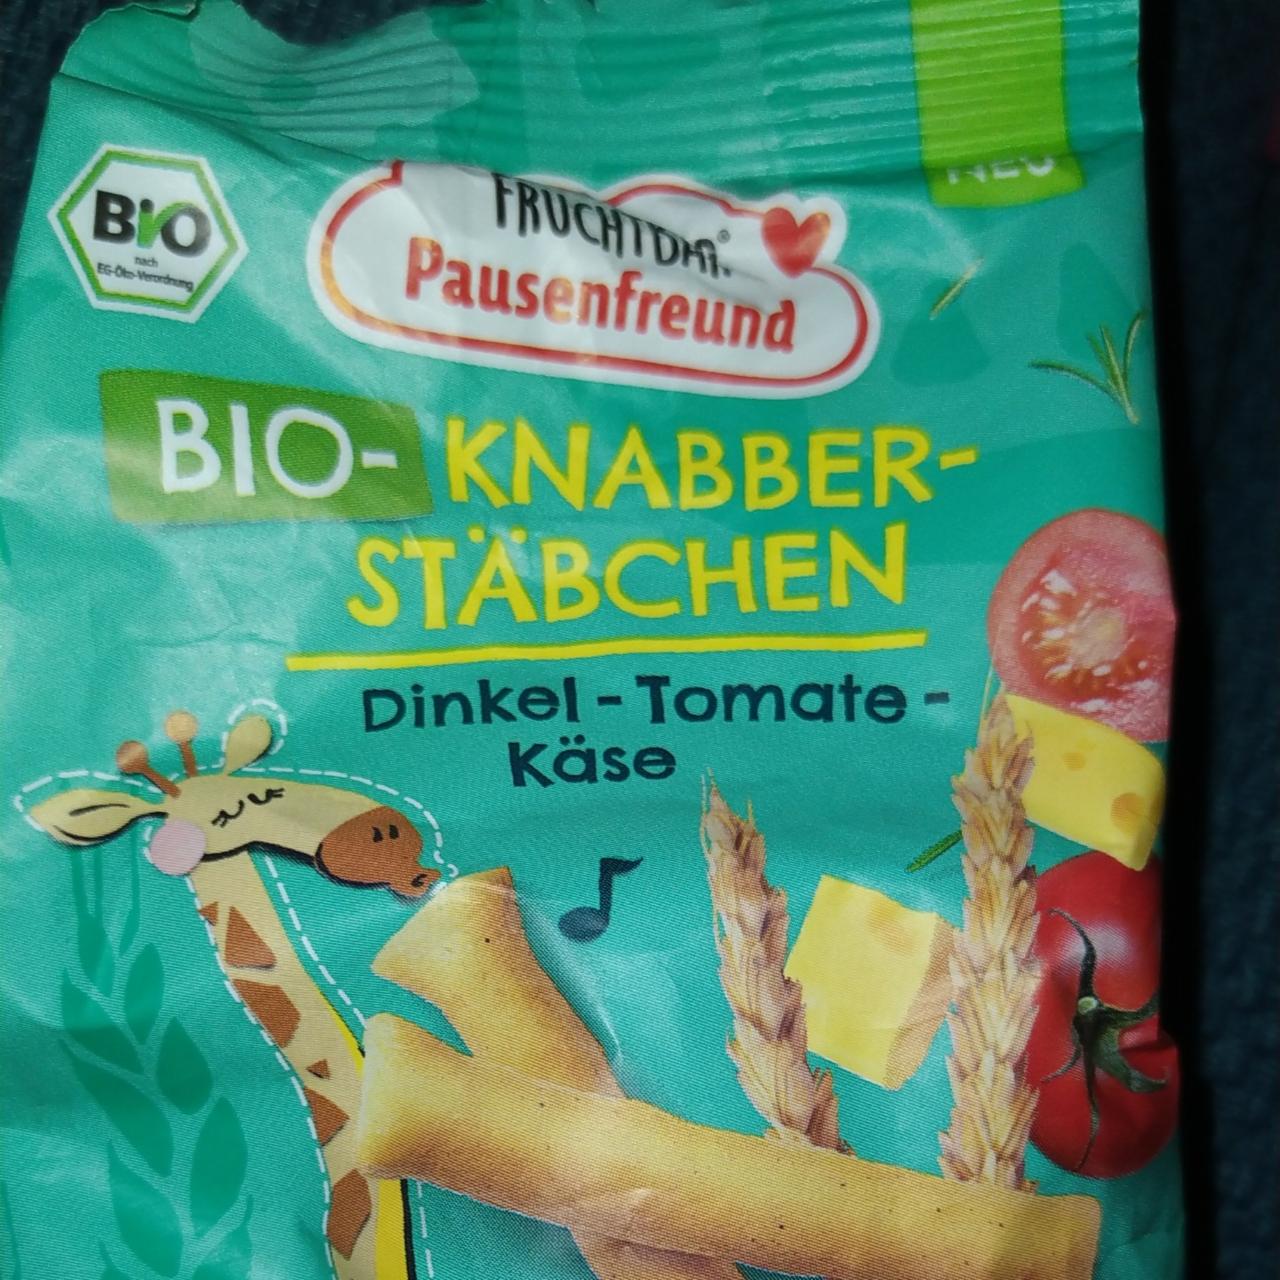 Fotografie - Bio-Knabber-Stäbchen Dinkel-Tomate-Käse FruchtBar Pausenfreund